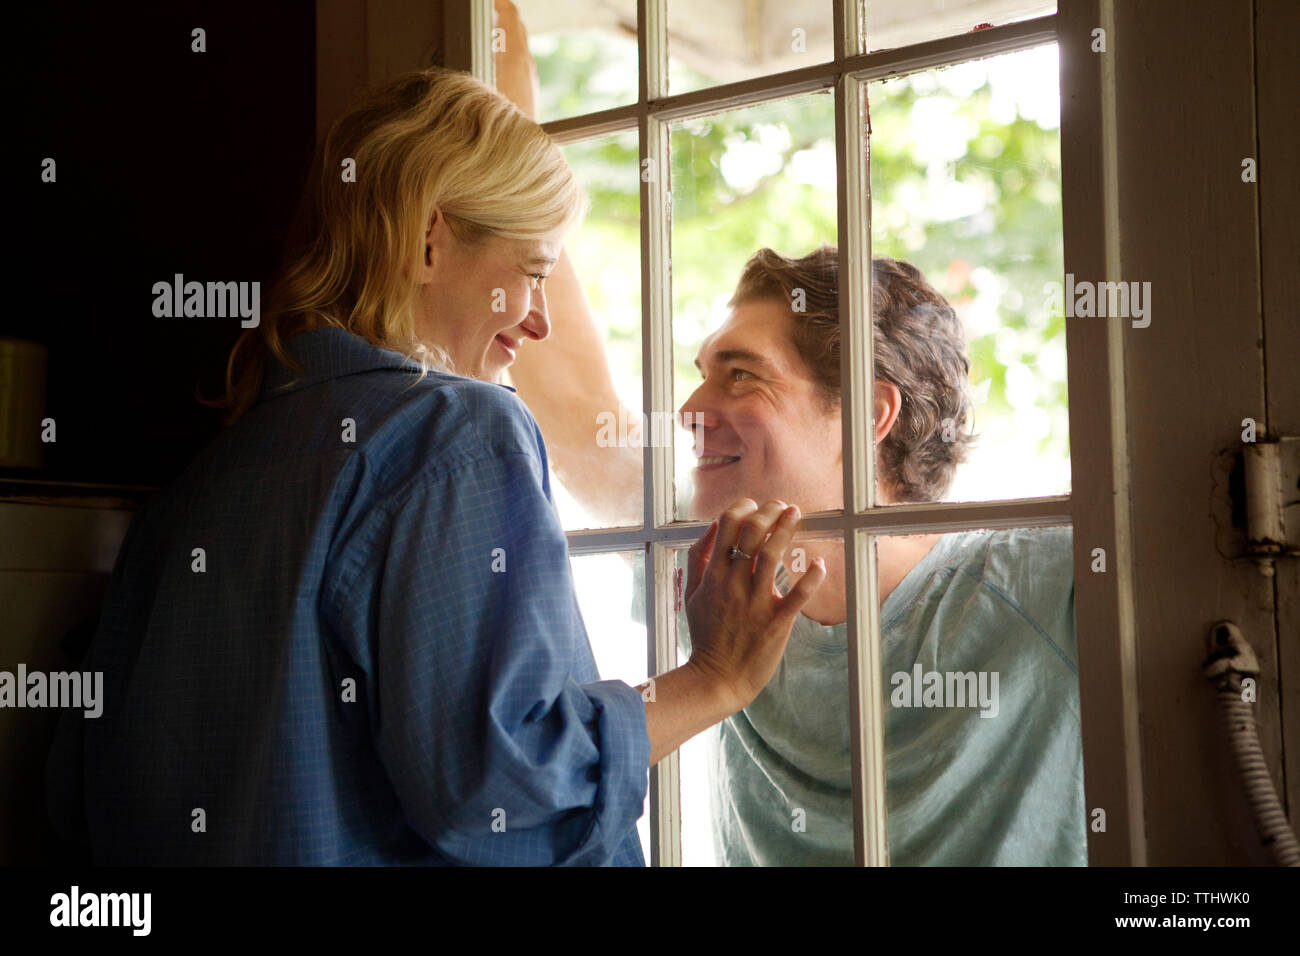 Woman looking at man through window Stock Photo